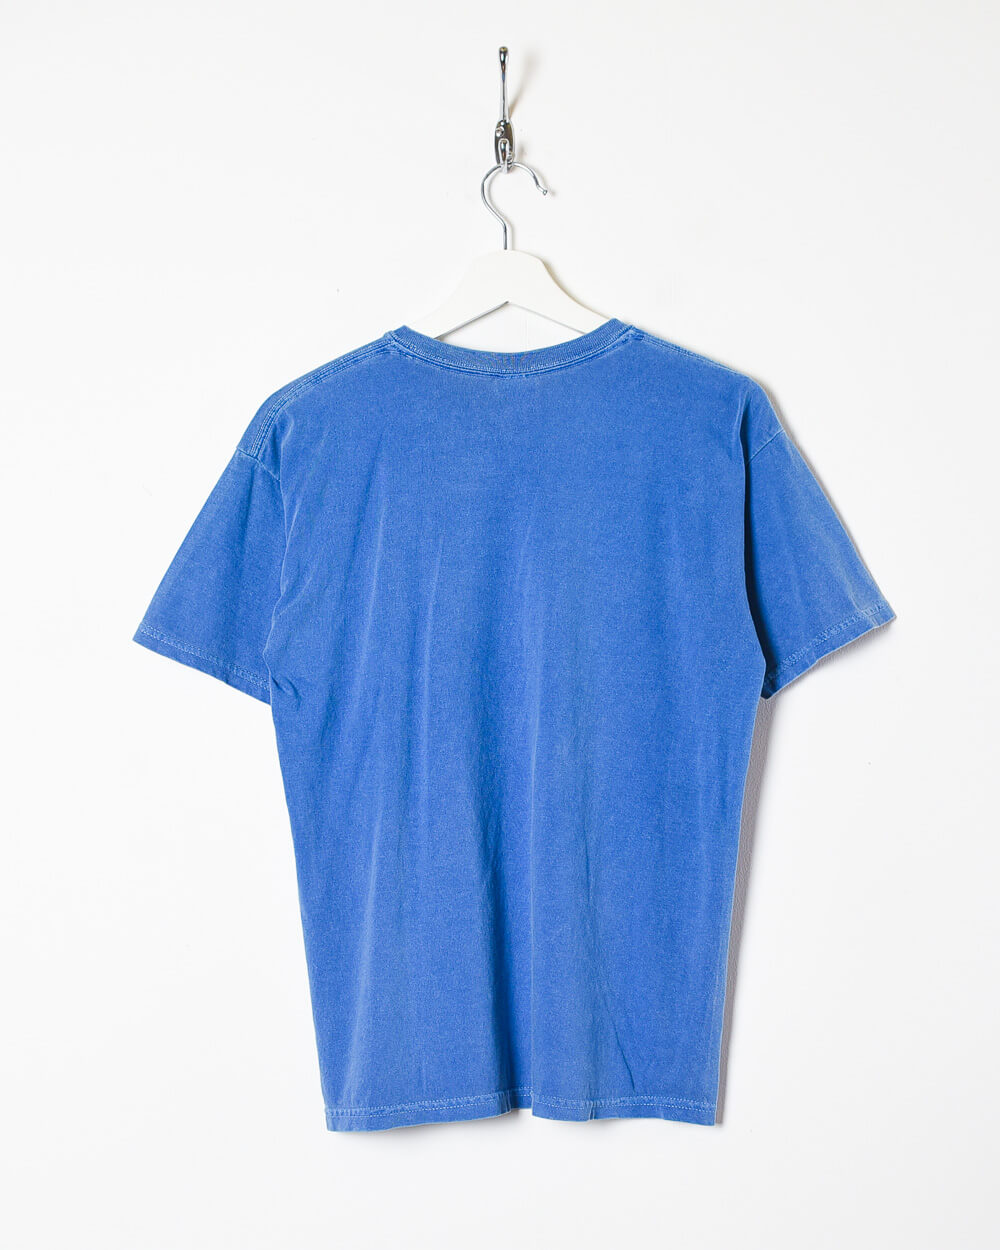 Blue Big Island Hawaii T-Shirt - Small